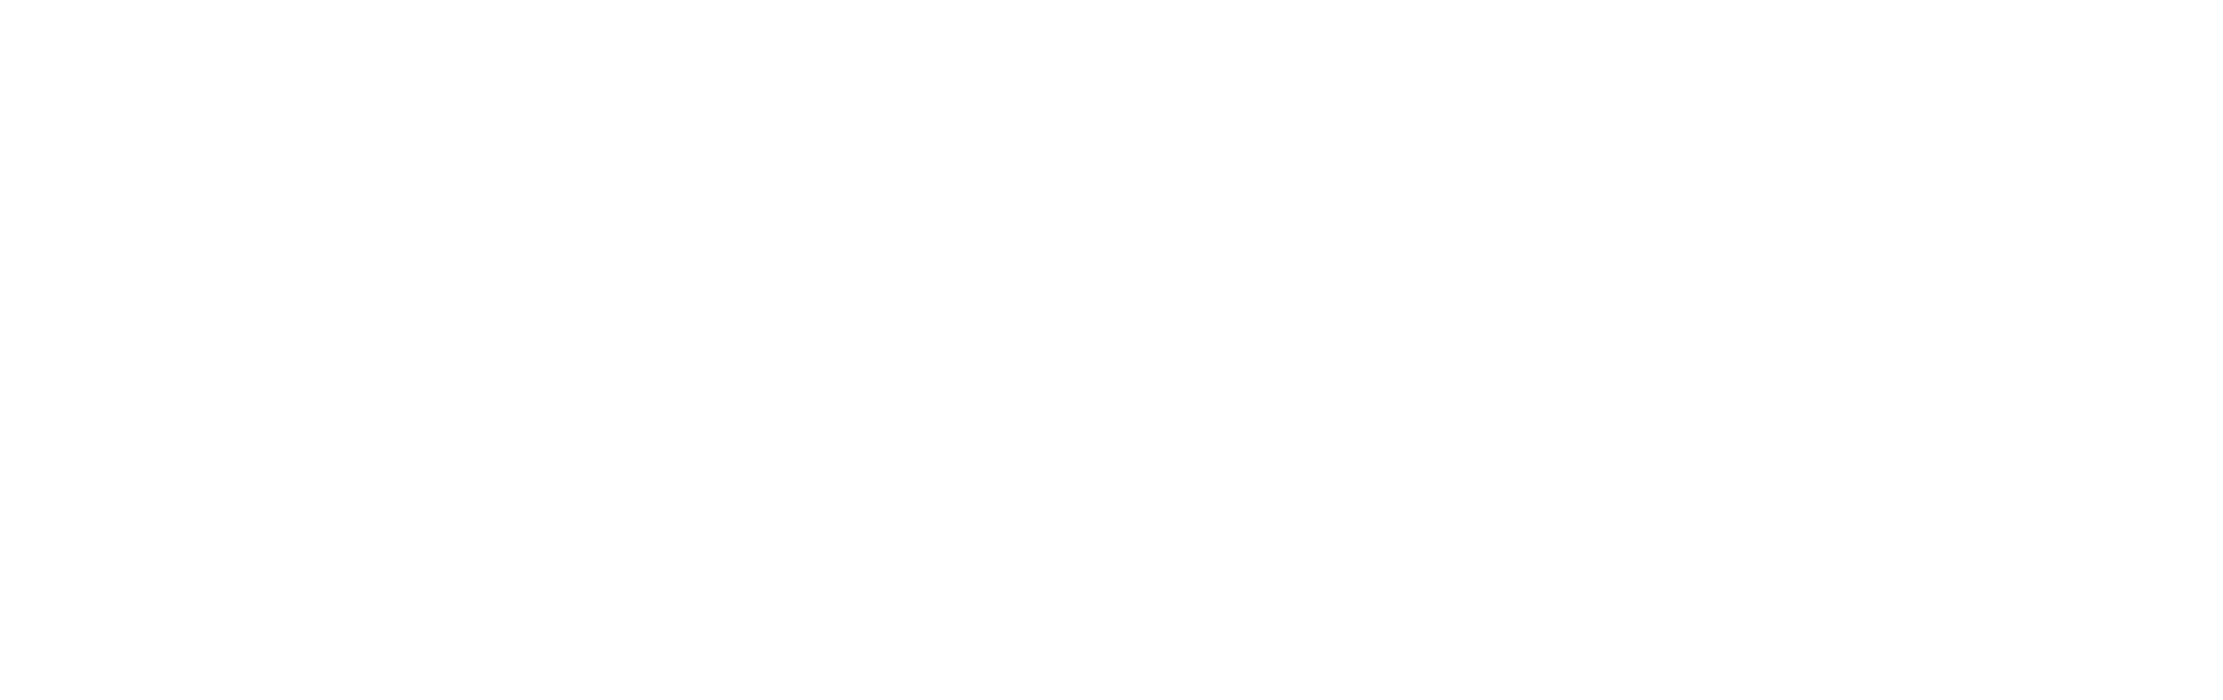 rippl-logo-white-rgb